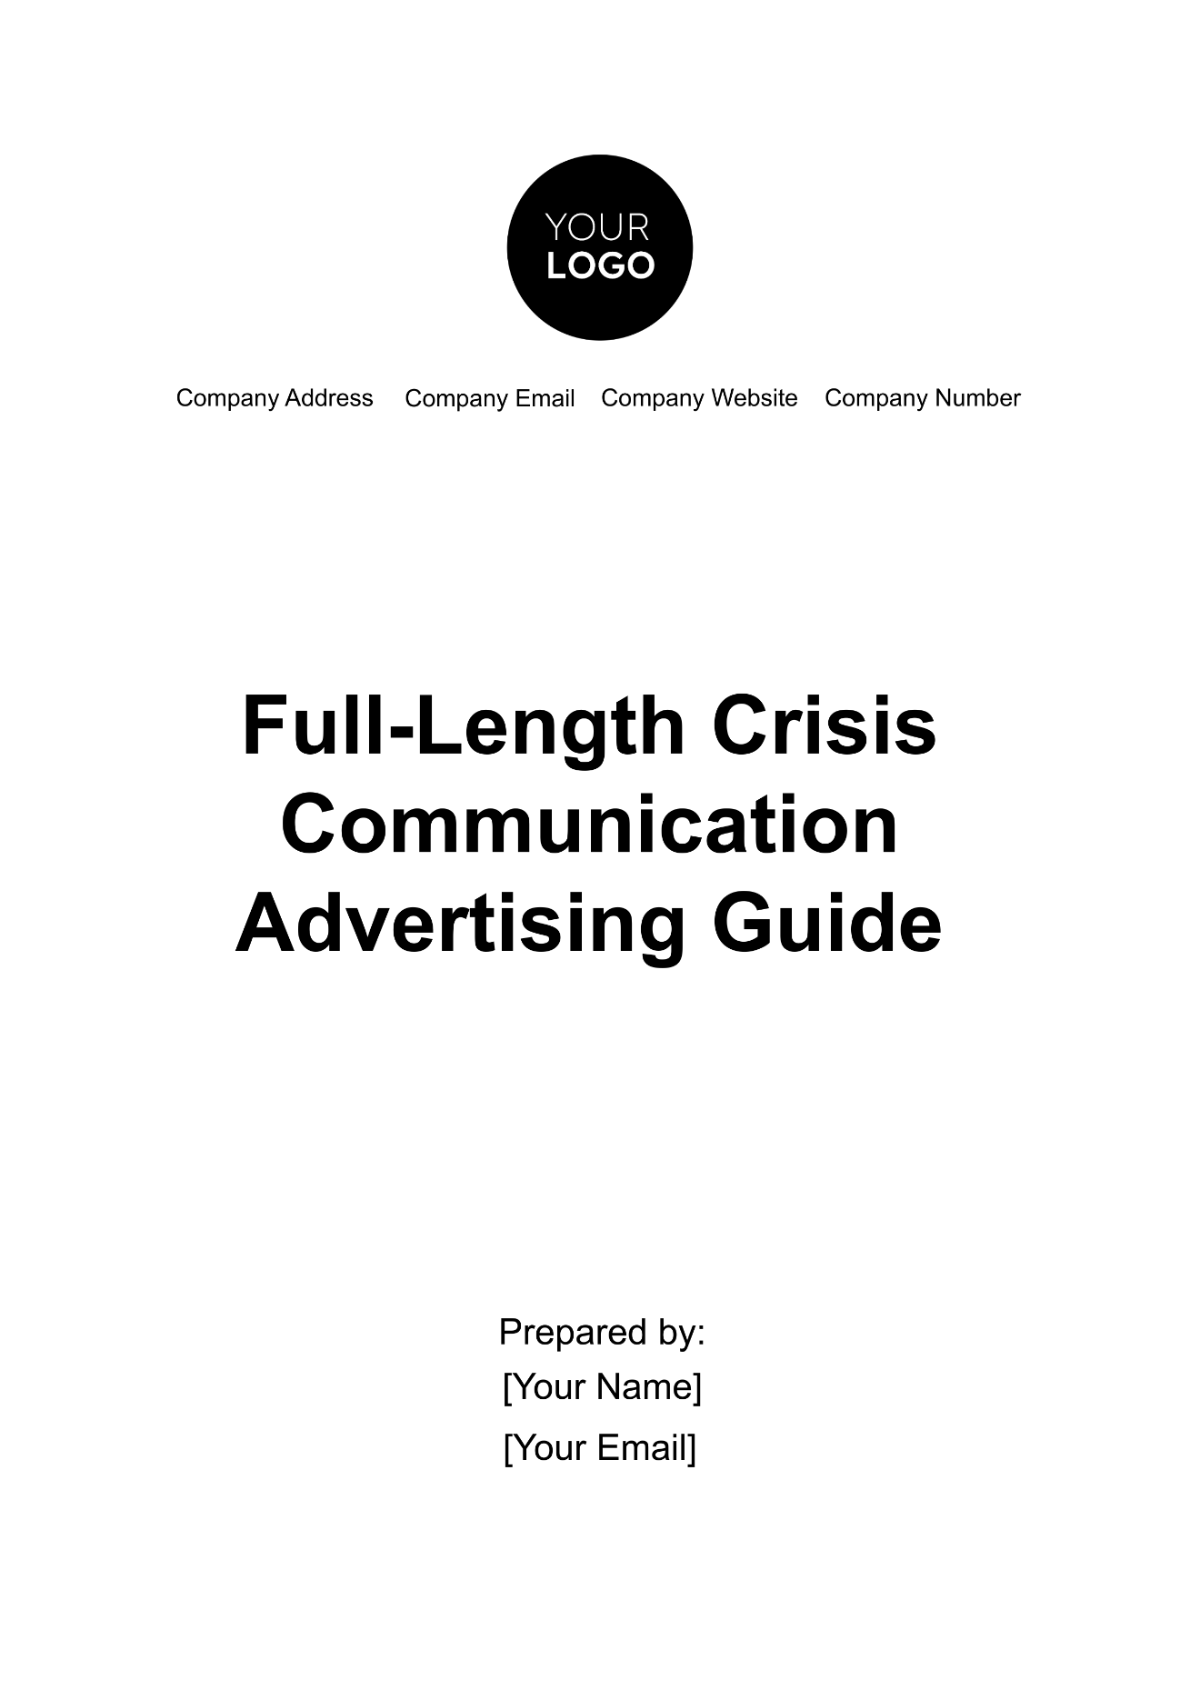 Full-Length Crisis Communication Advertising Guide Template